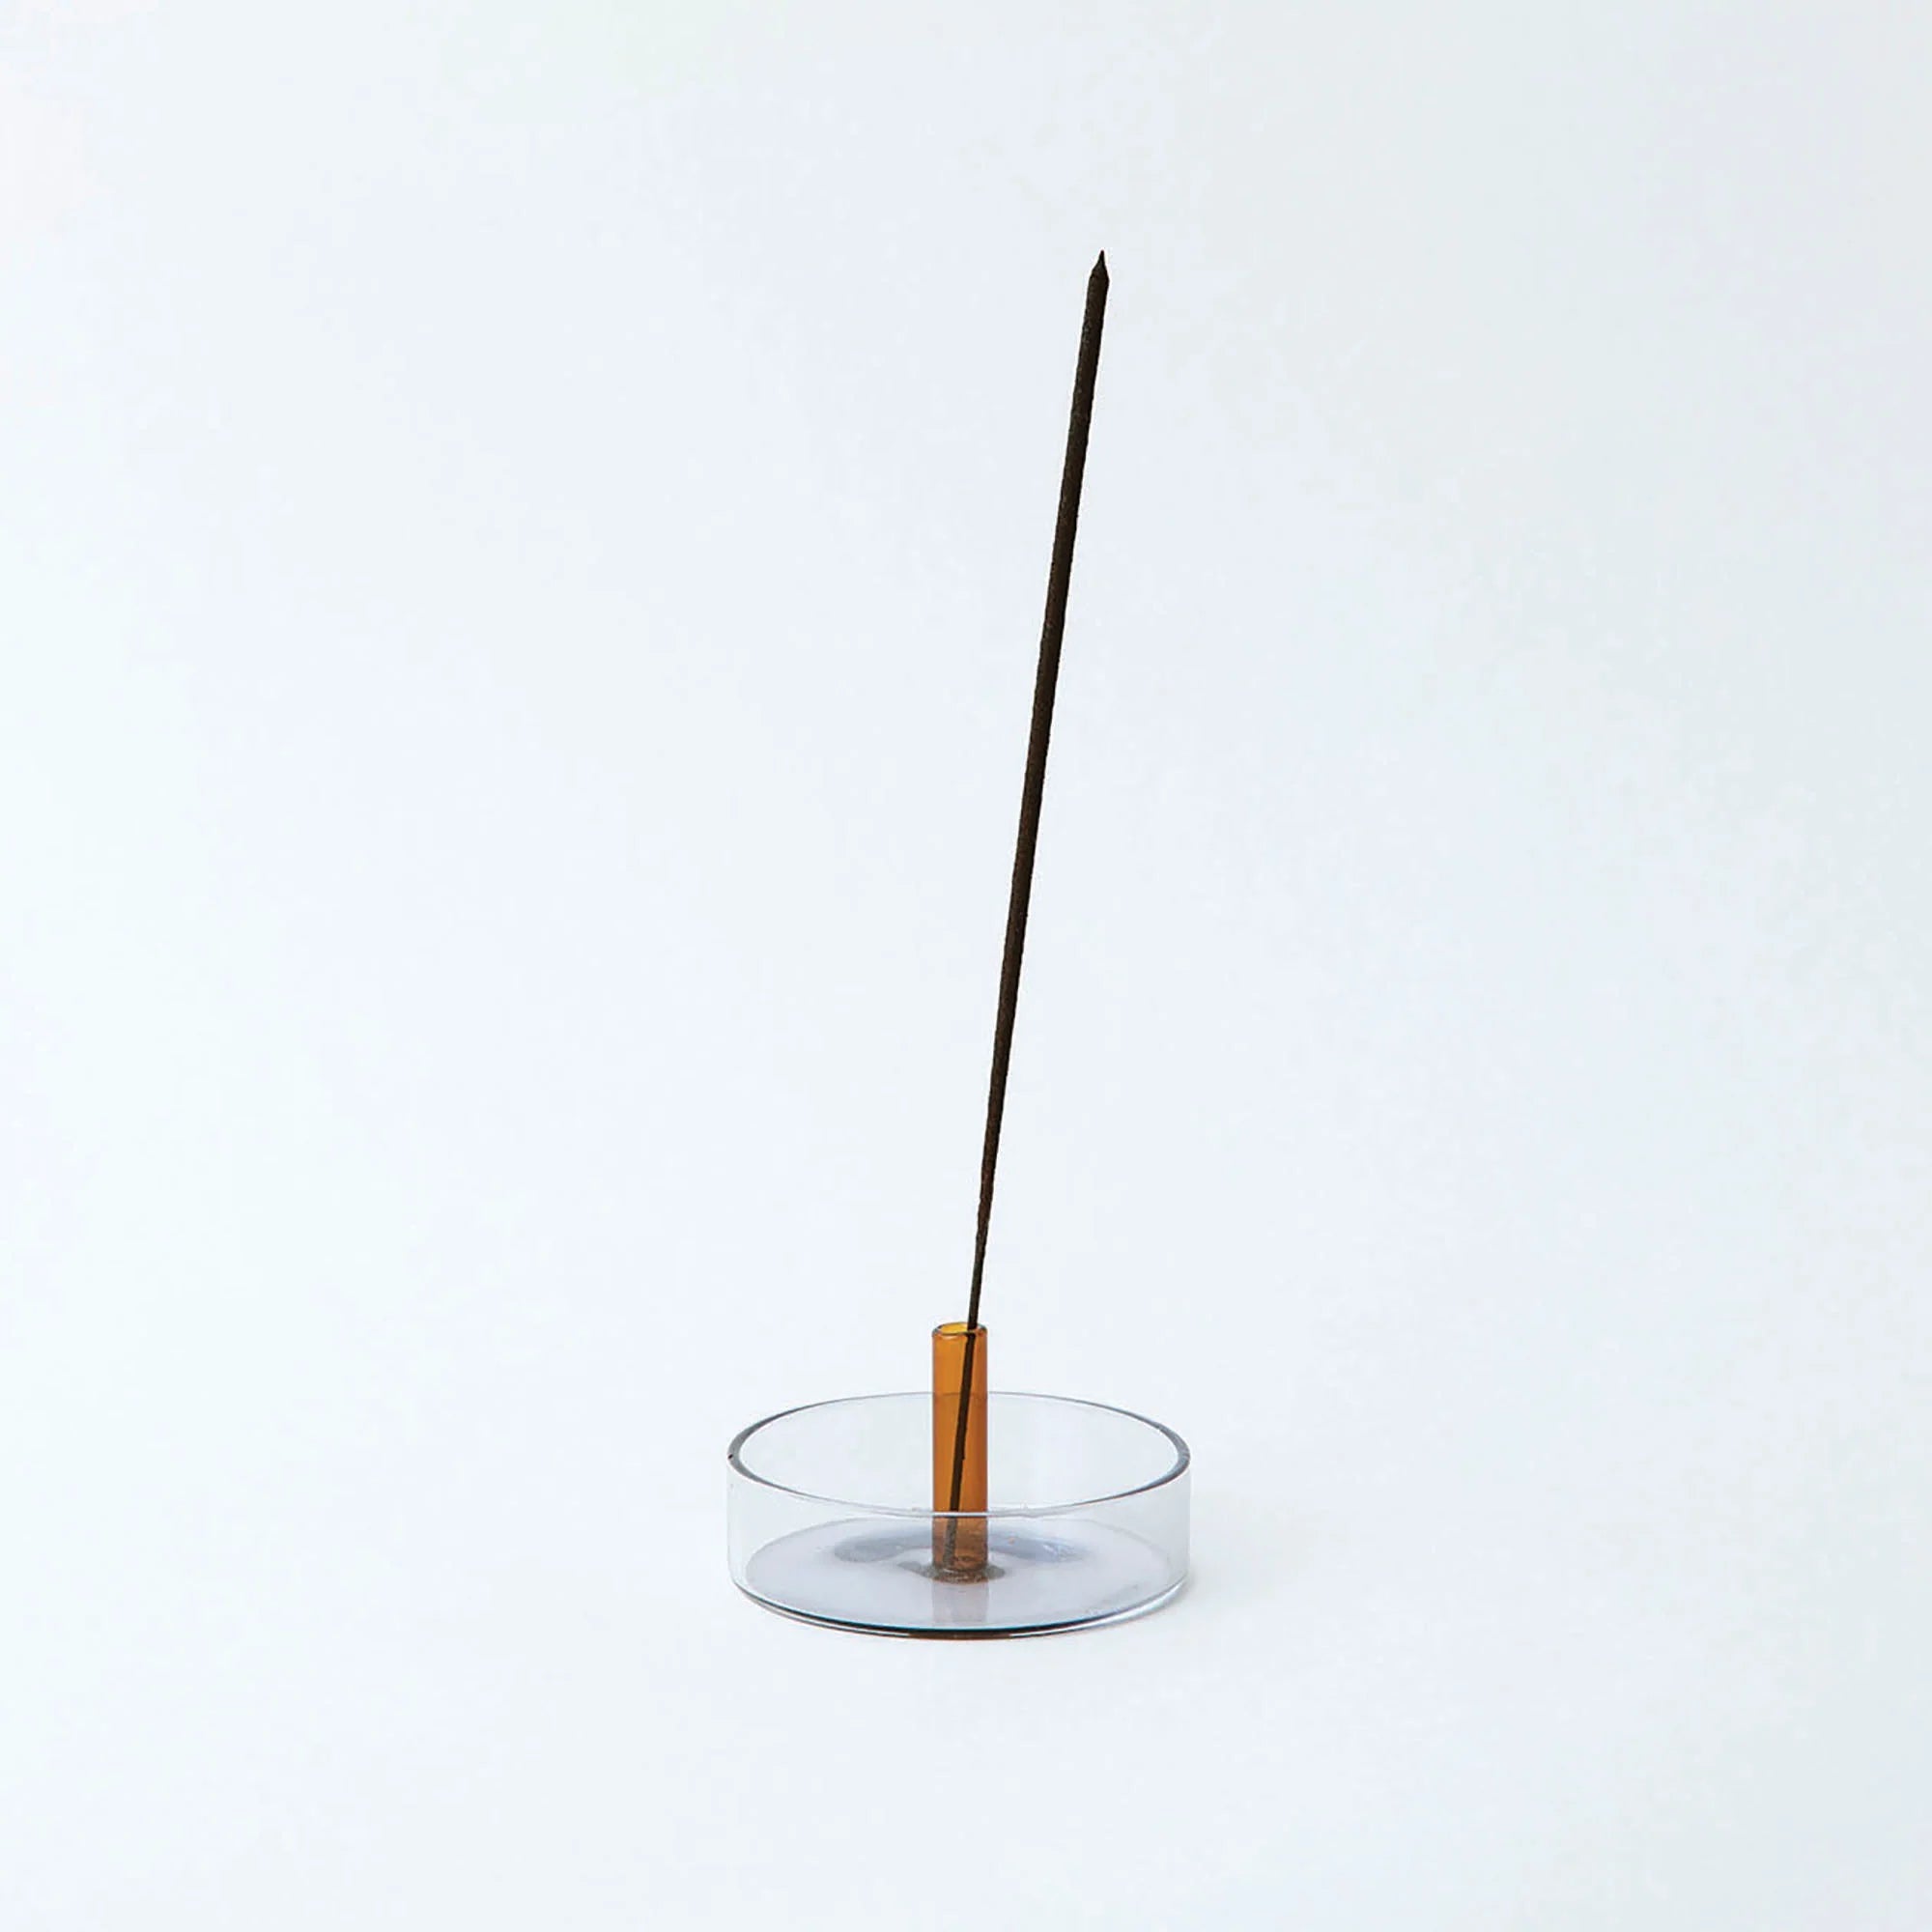 Dual Color Glass Incense Holder, Gray/Orange Block Design 